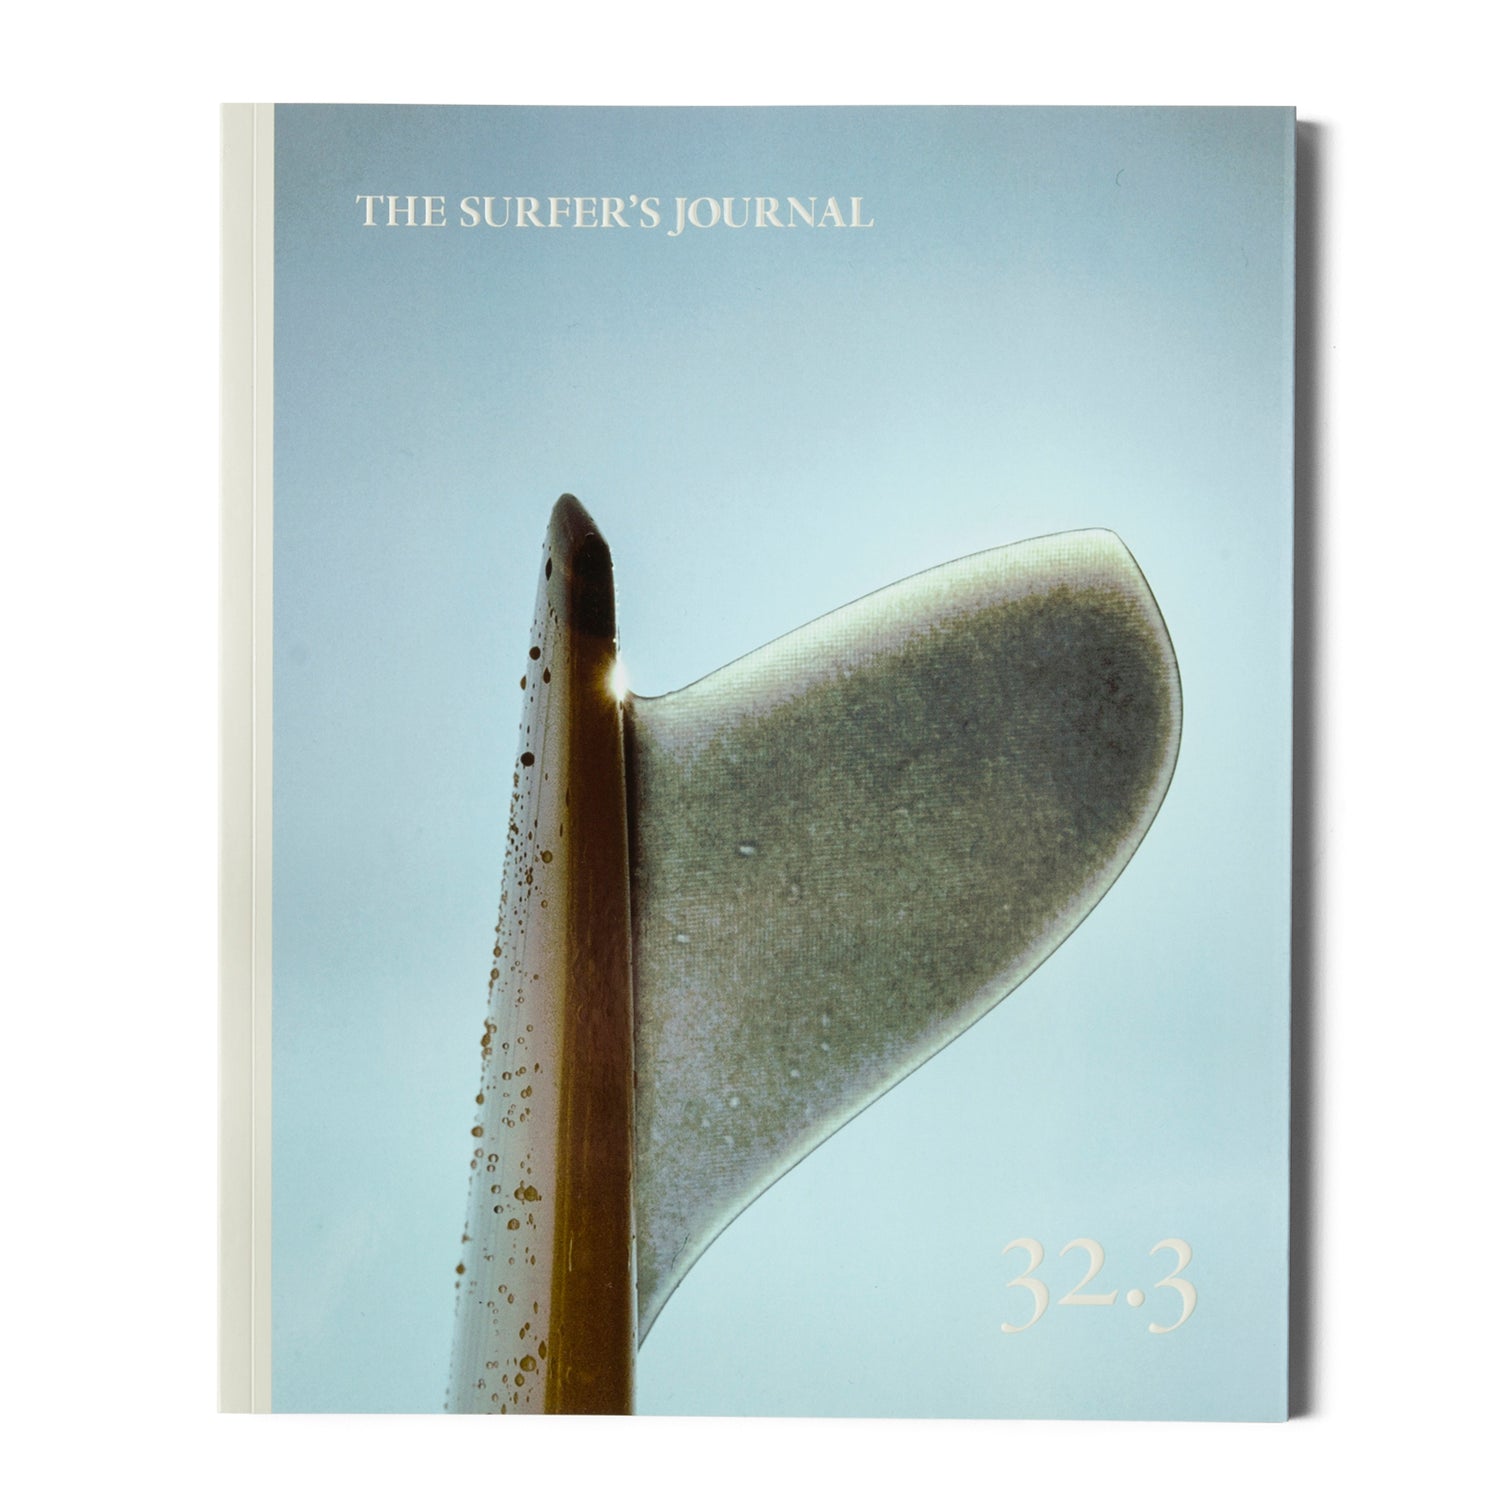 THE SURFER'S JOURNAL 32.3. - REBEL FIN CO.